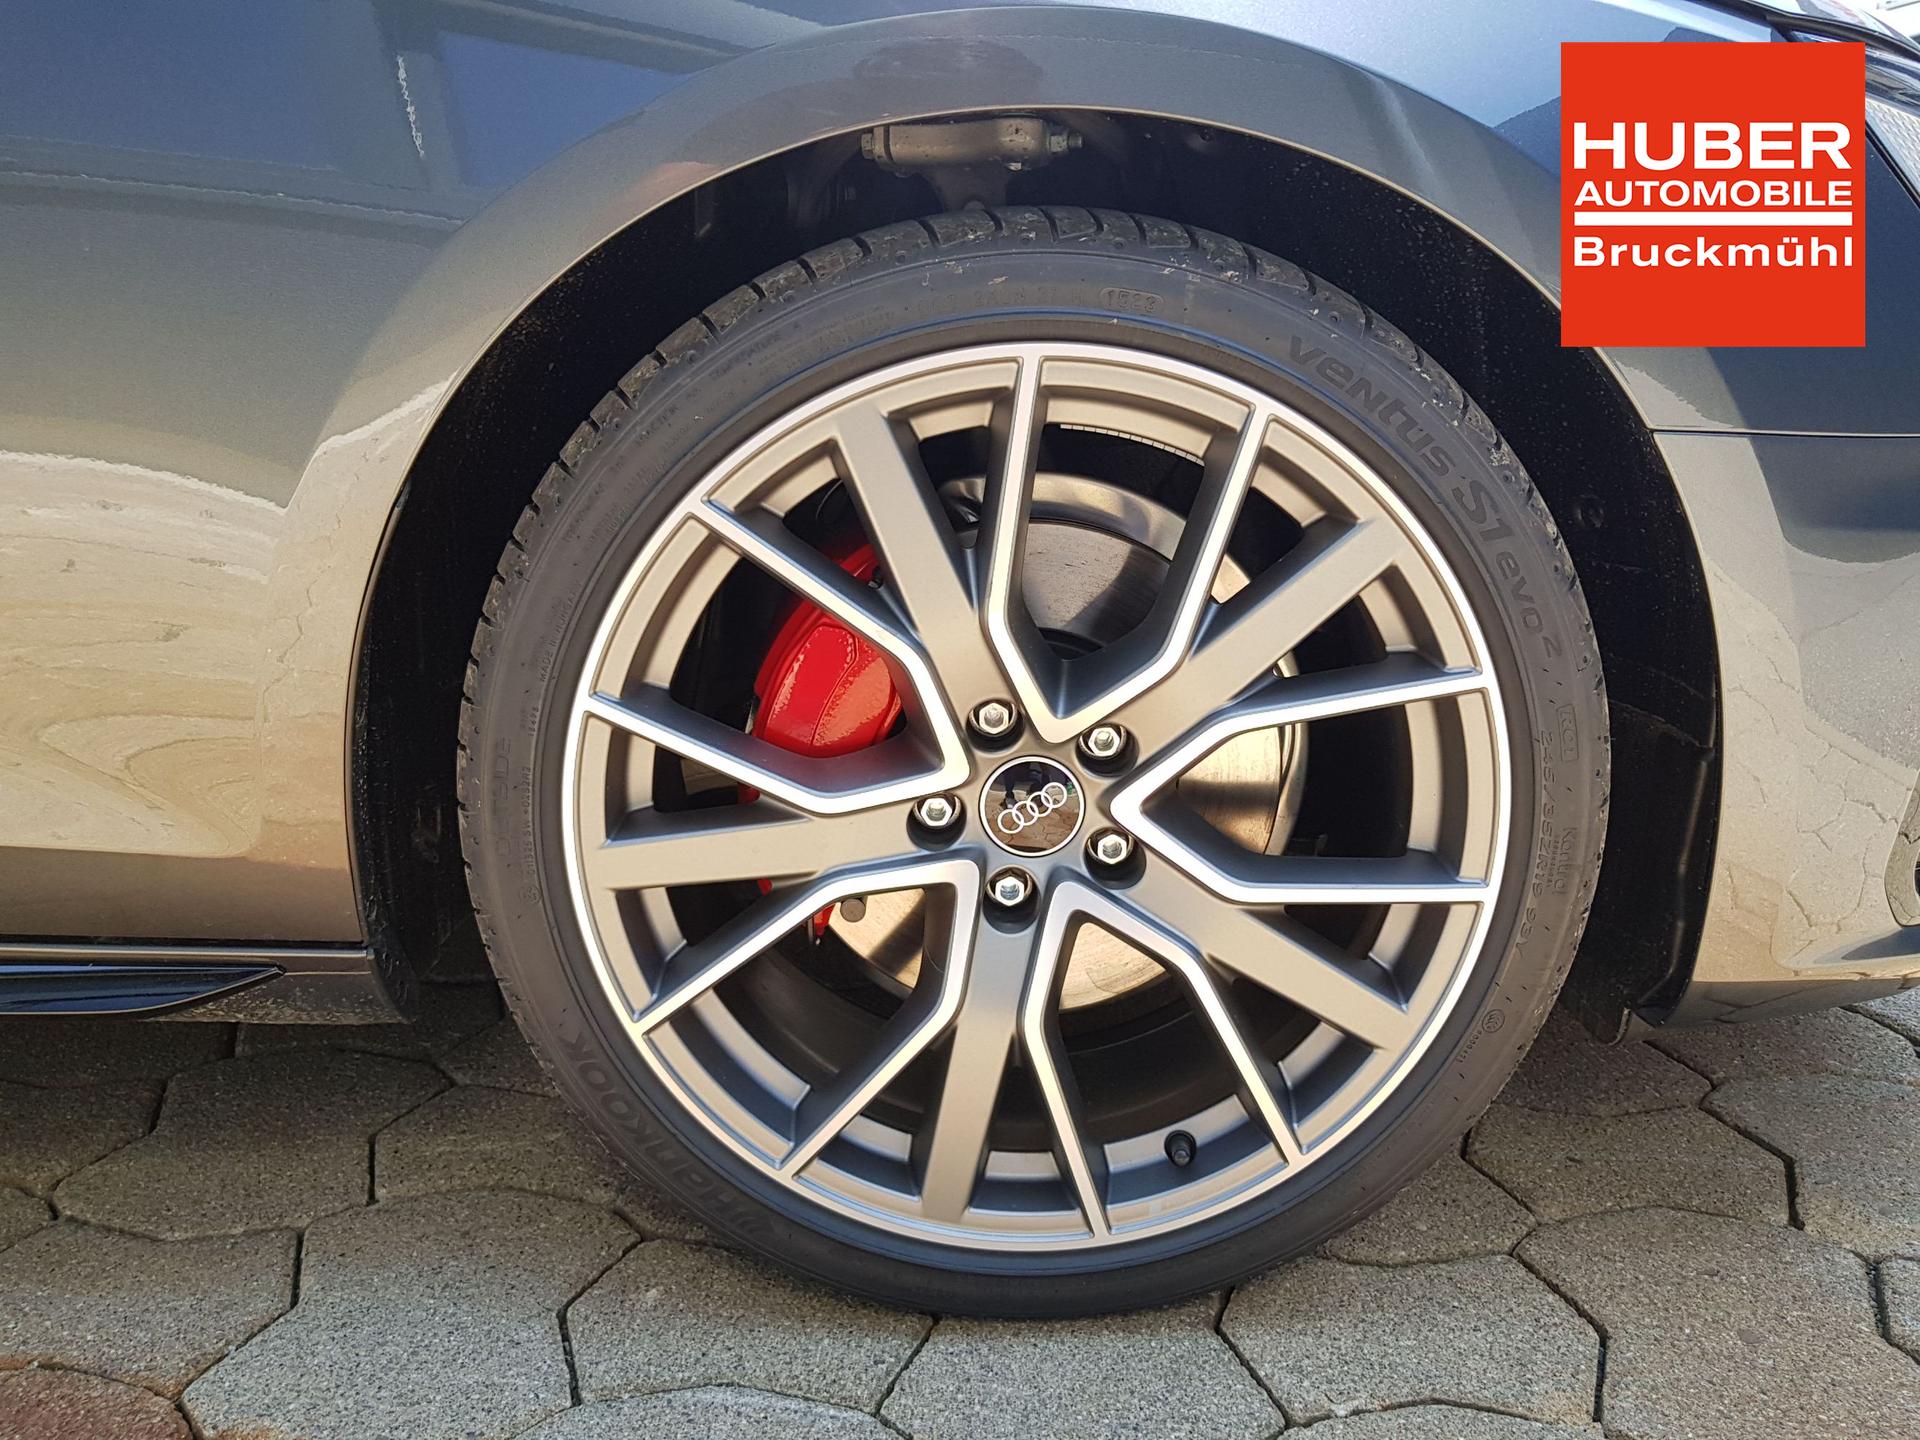 Opel - Huber Automobile - Der neue Astra